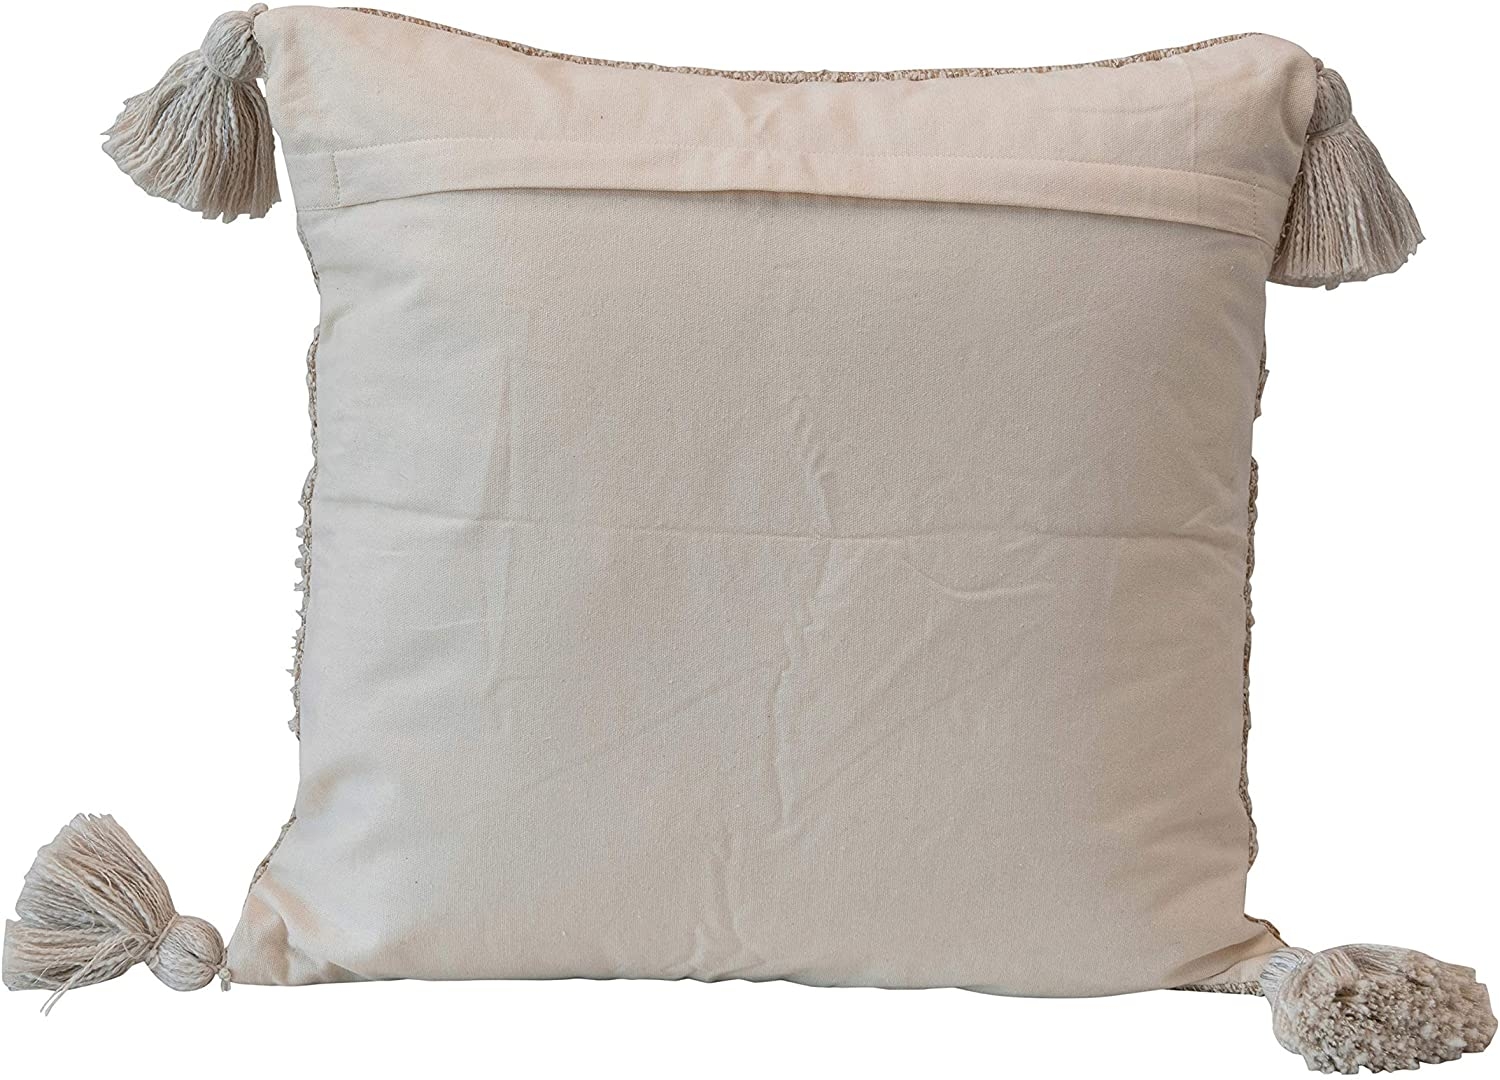 Woven Cotton Blend Lumbar Pillow with Metallic Thread & Tassels, Cream & Tan, 20" x 20" - Image 1